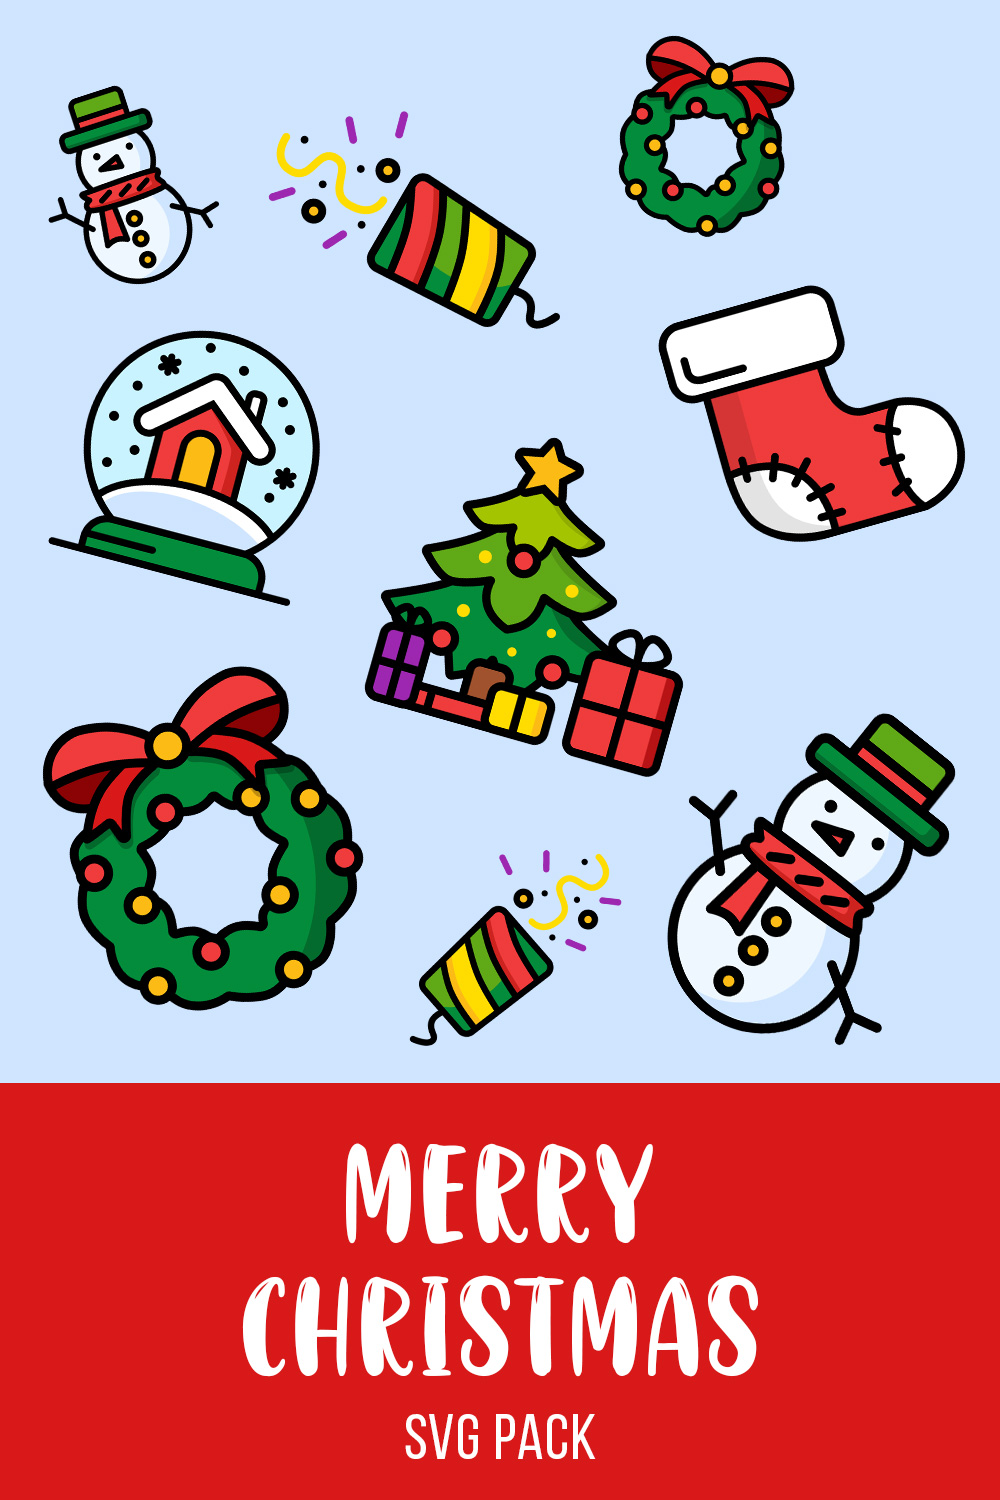 Merry Christmas SVG Pack pinterest.